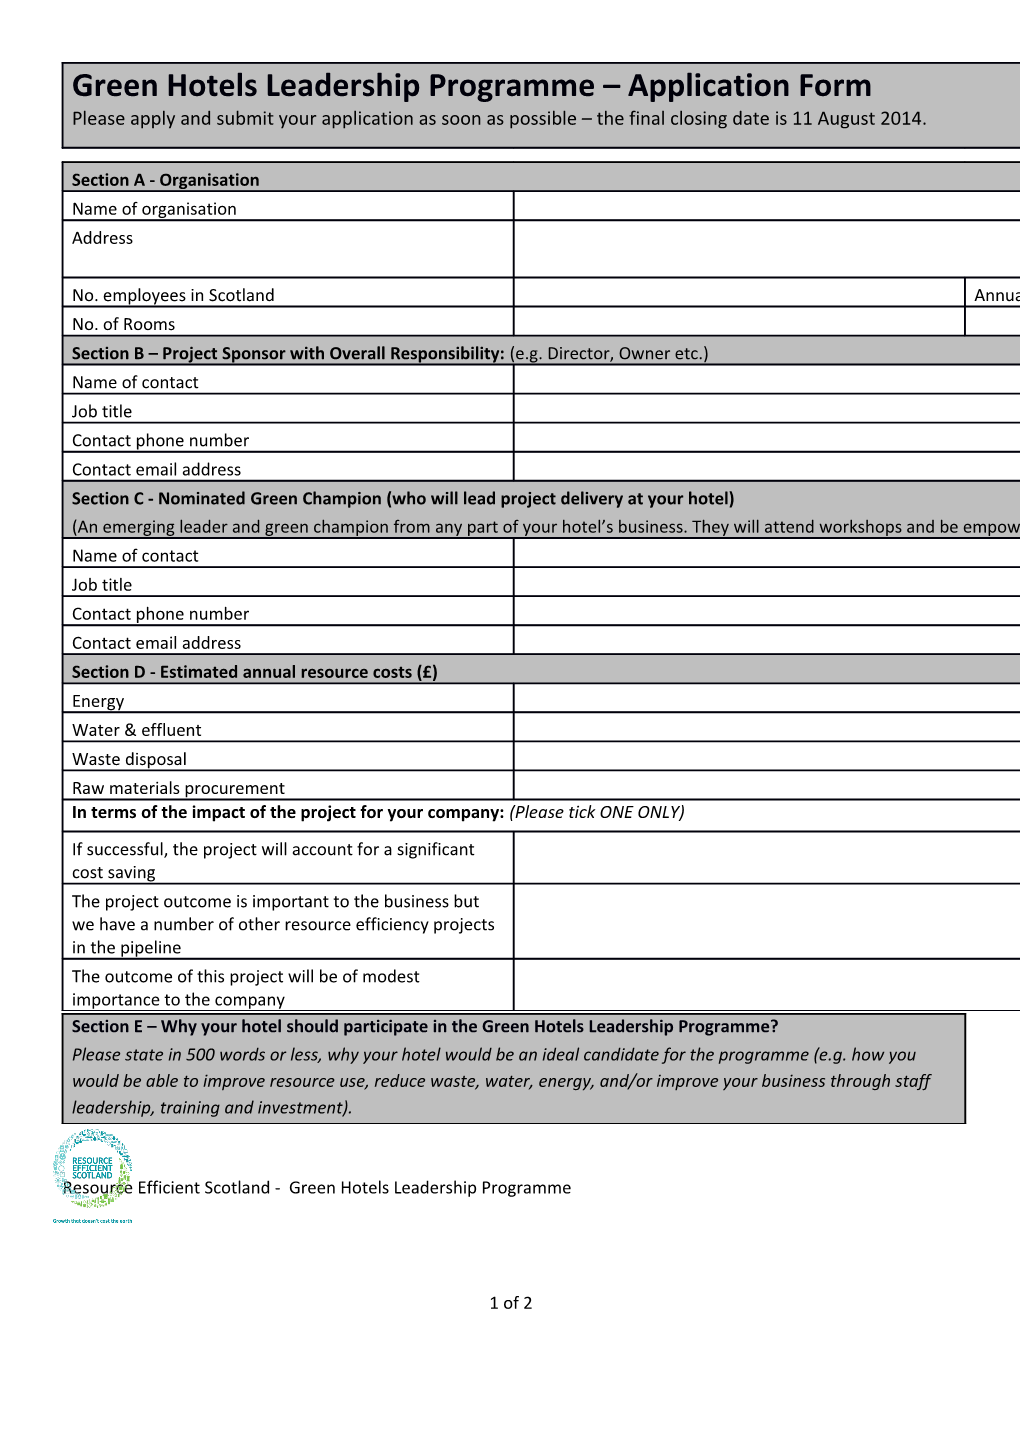 Green Hotels Leadership Programme Application Form